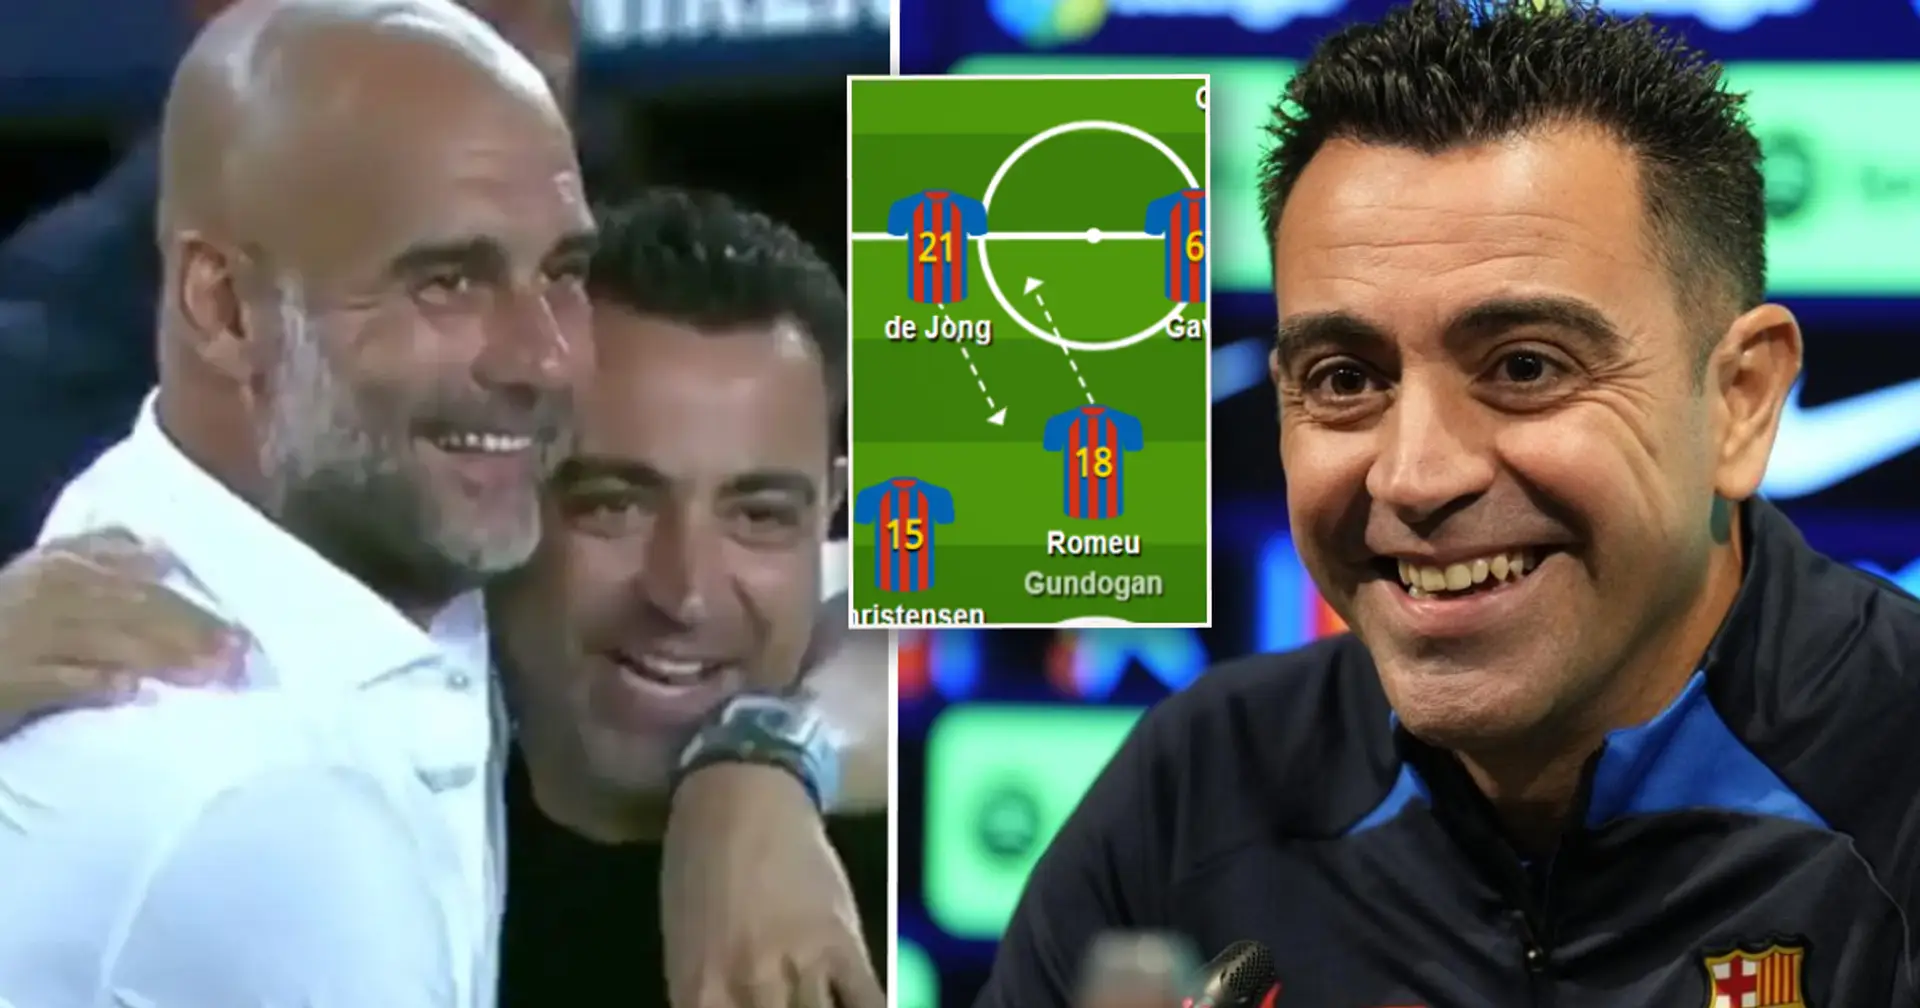 Barca players' positioning v Betis shows Xavi's brilliant new tactics to rain goals like Pep